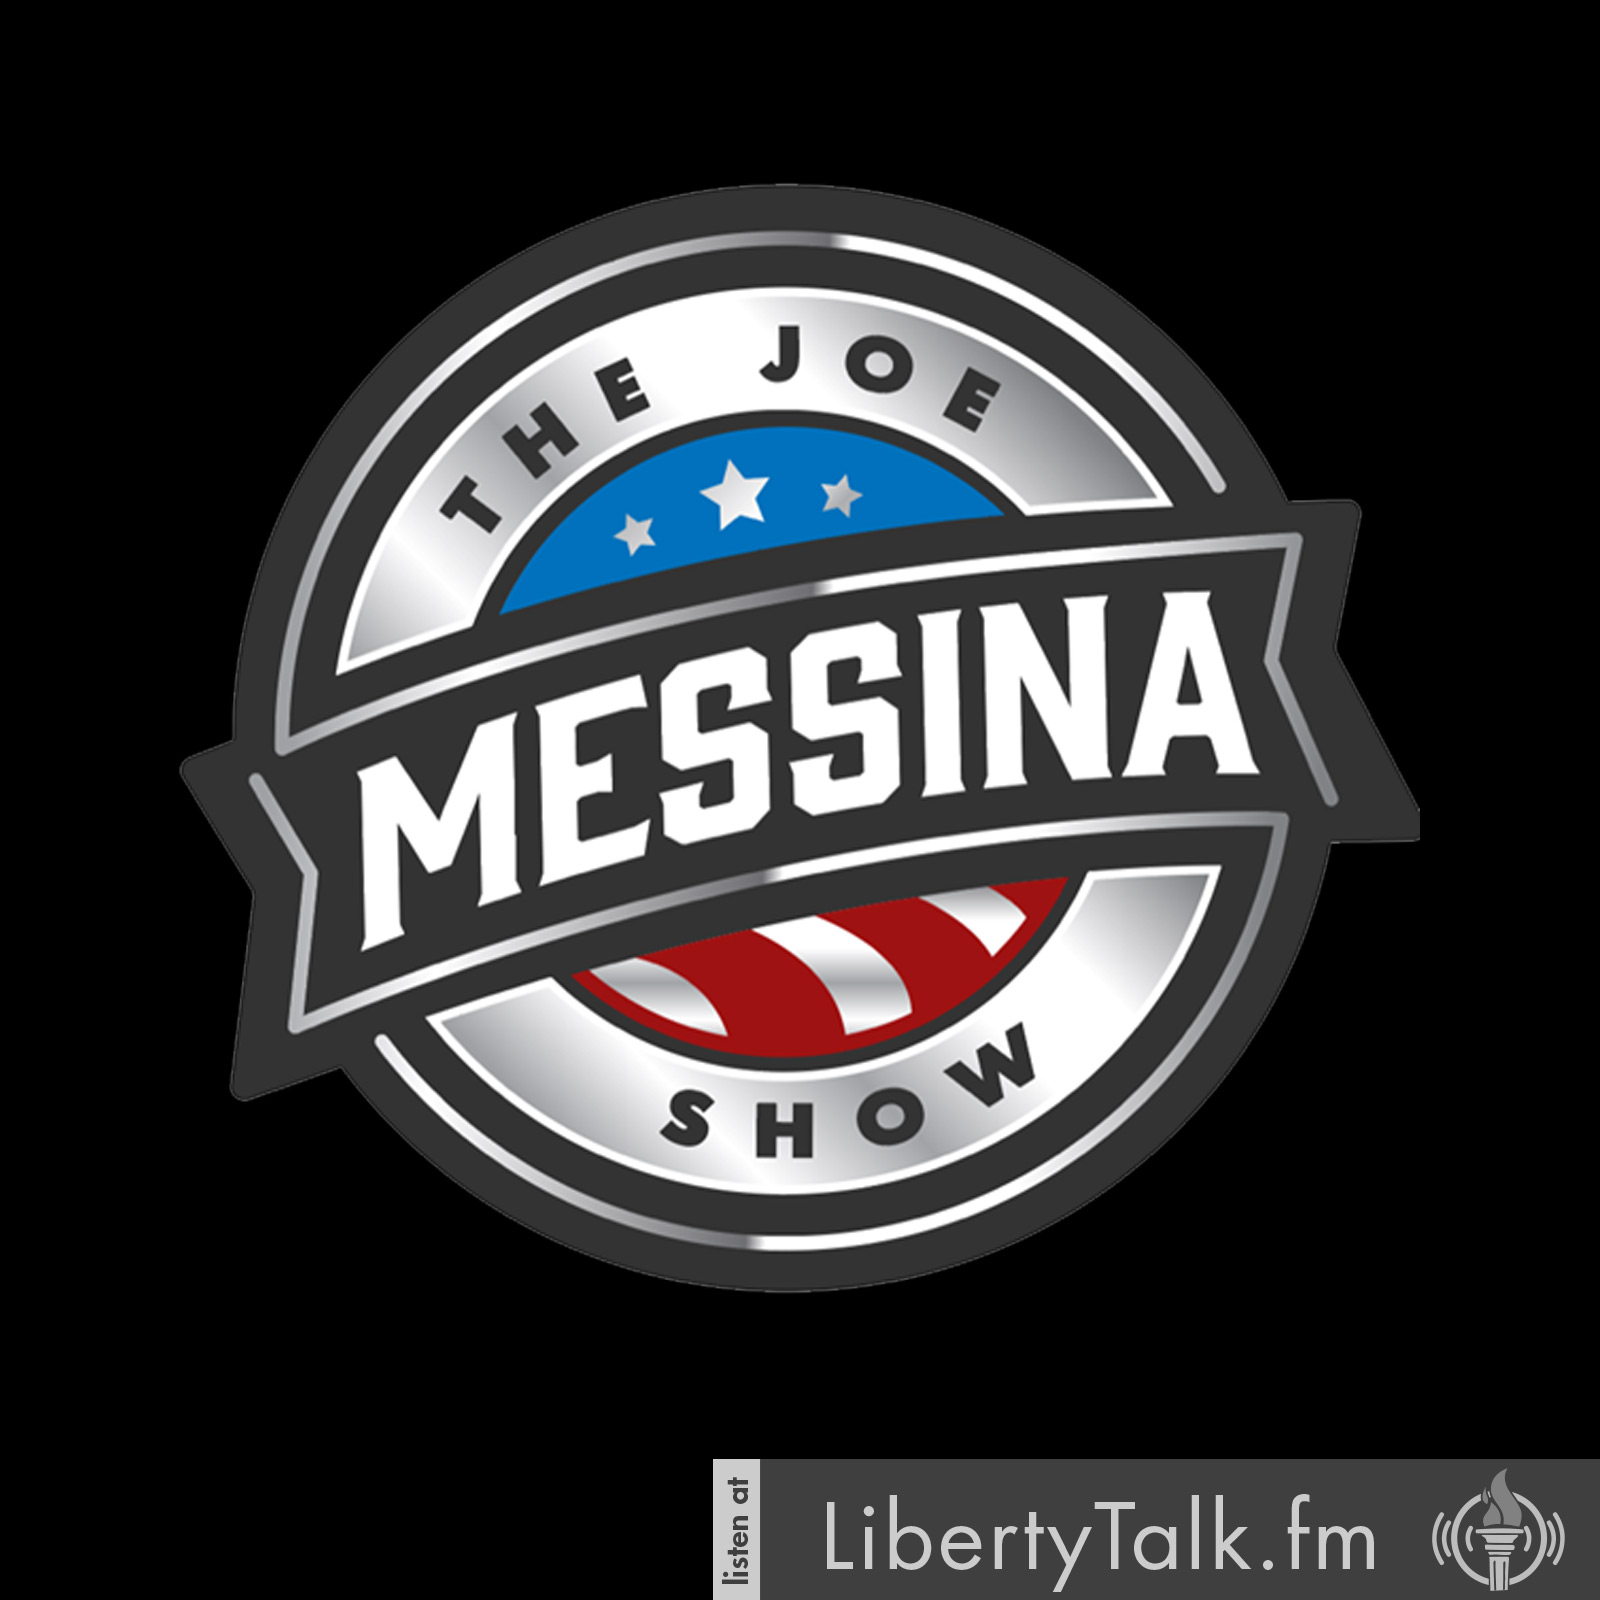 Joe Messina Show on Liberty Talk FM - Show LOGO